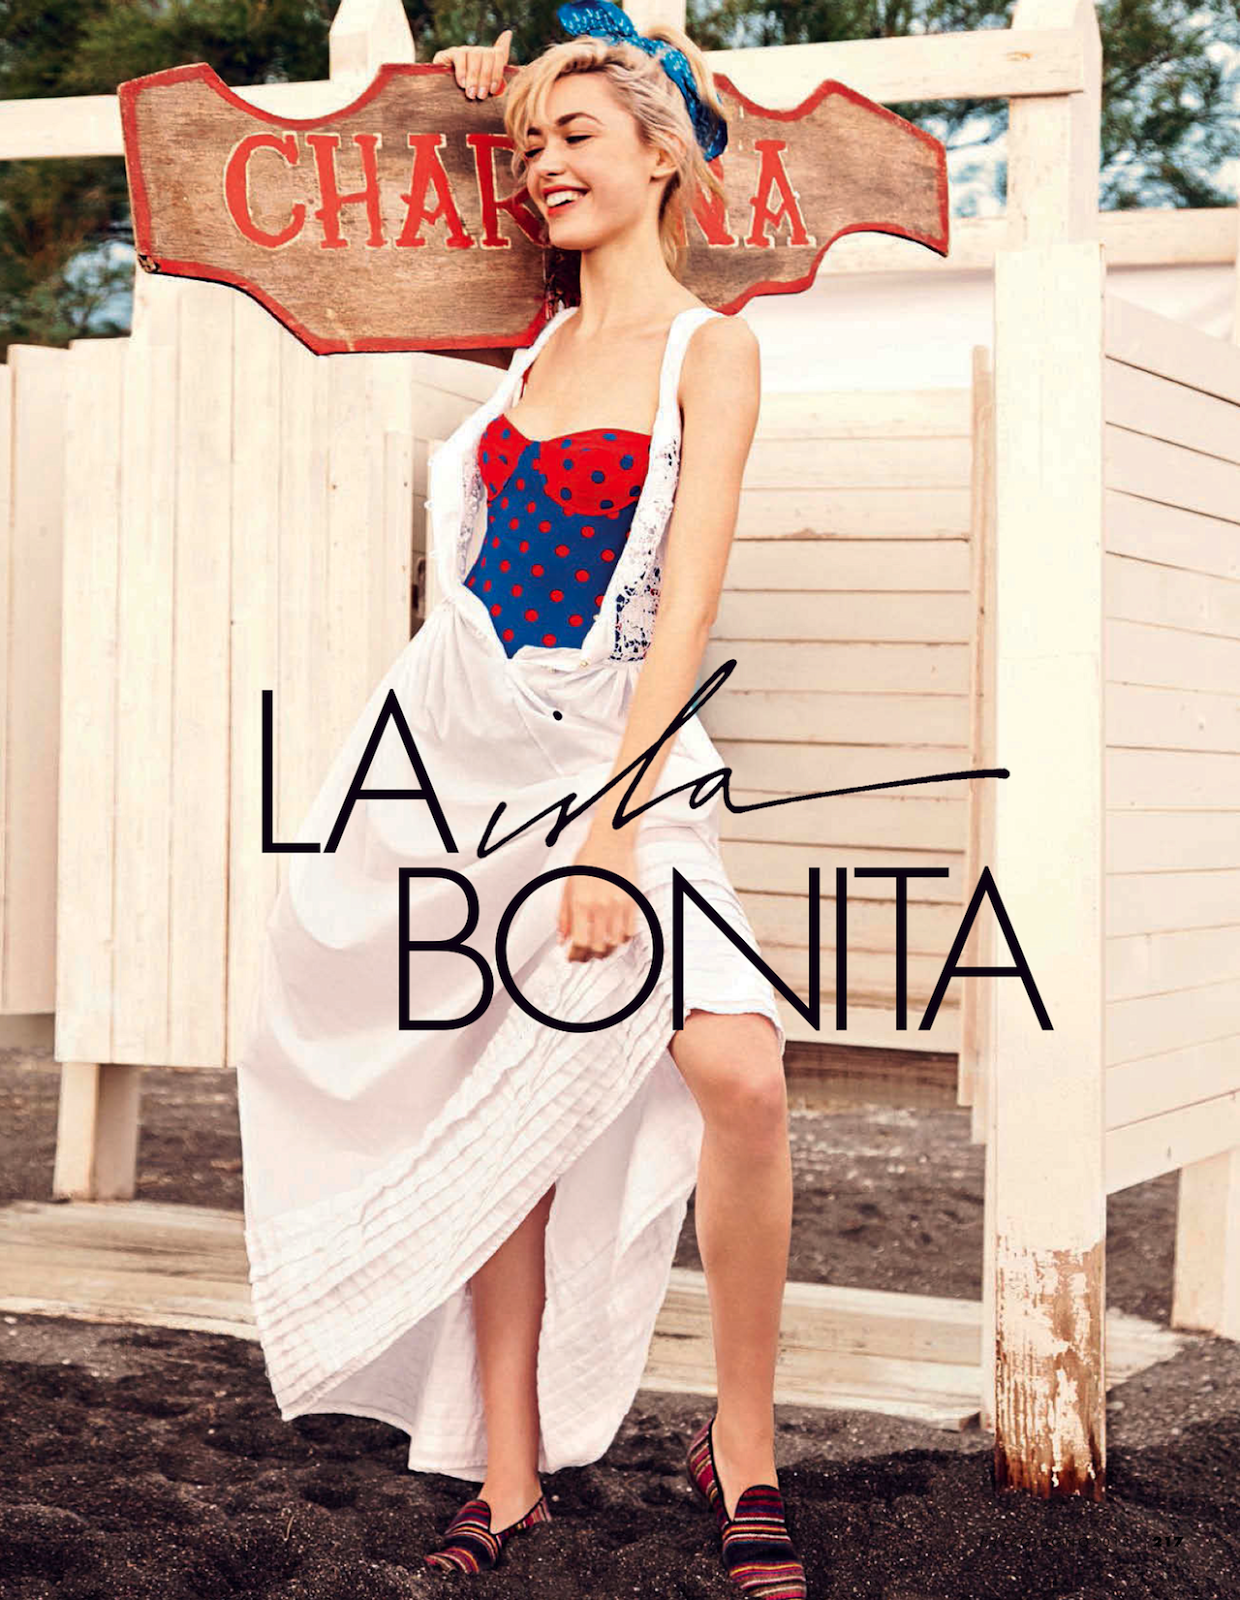 Elle Italia June 2013 “La Isla Bonita” | Carlotta Manaigo | Gucci | Elle Italia | Eva Geraldine Fontanelli | Numerique Retouch Photo Retouching Studio